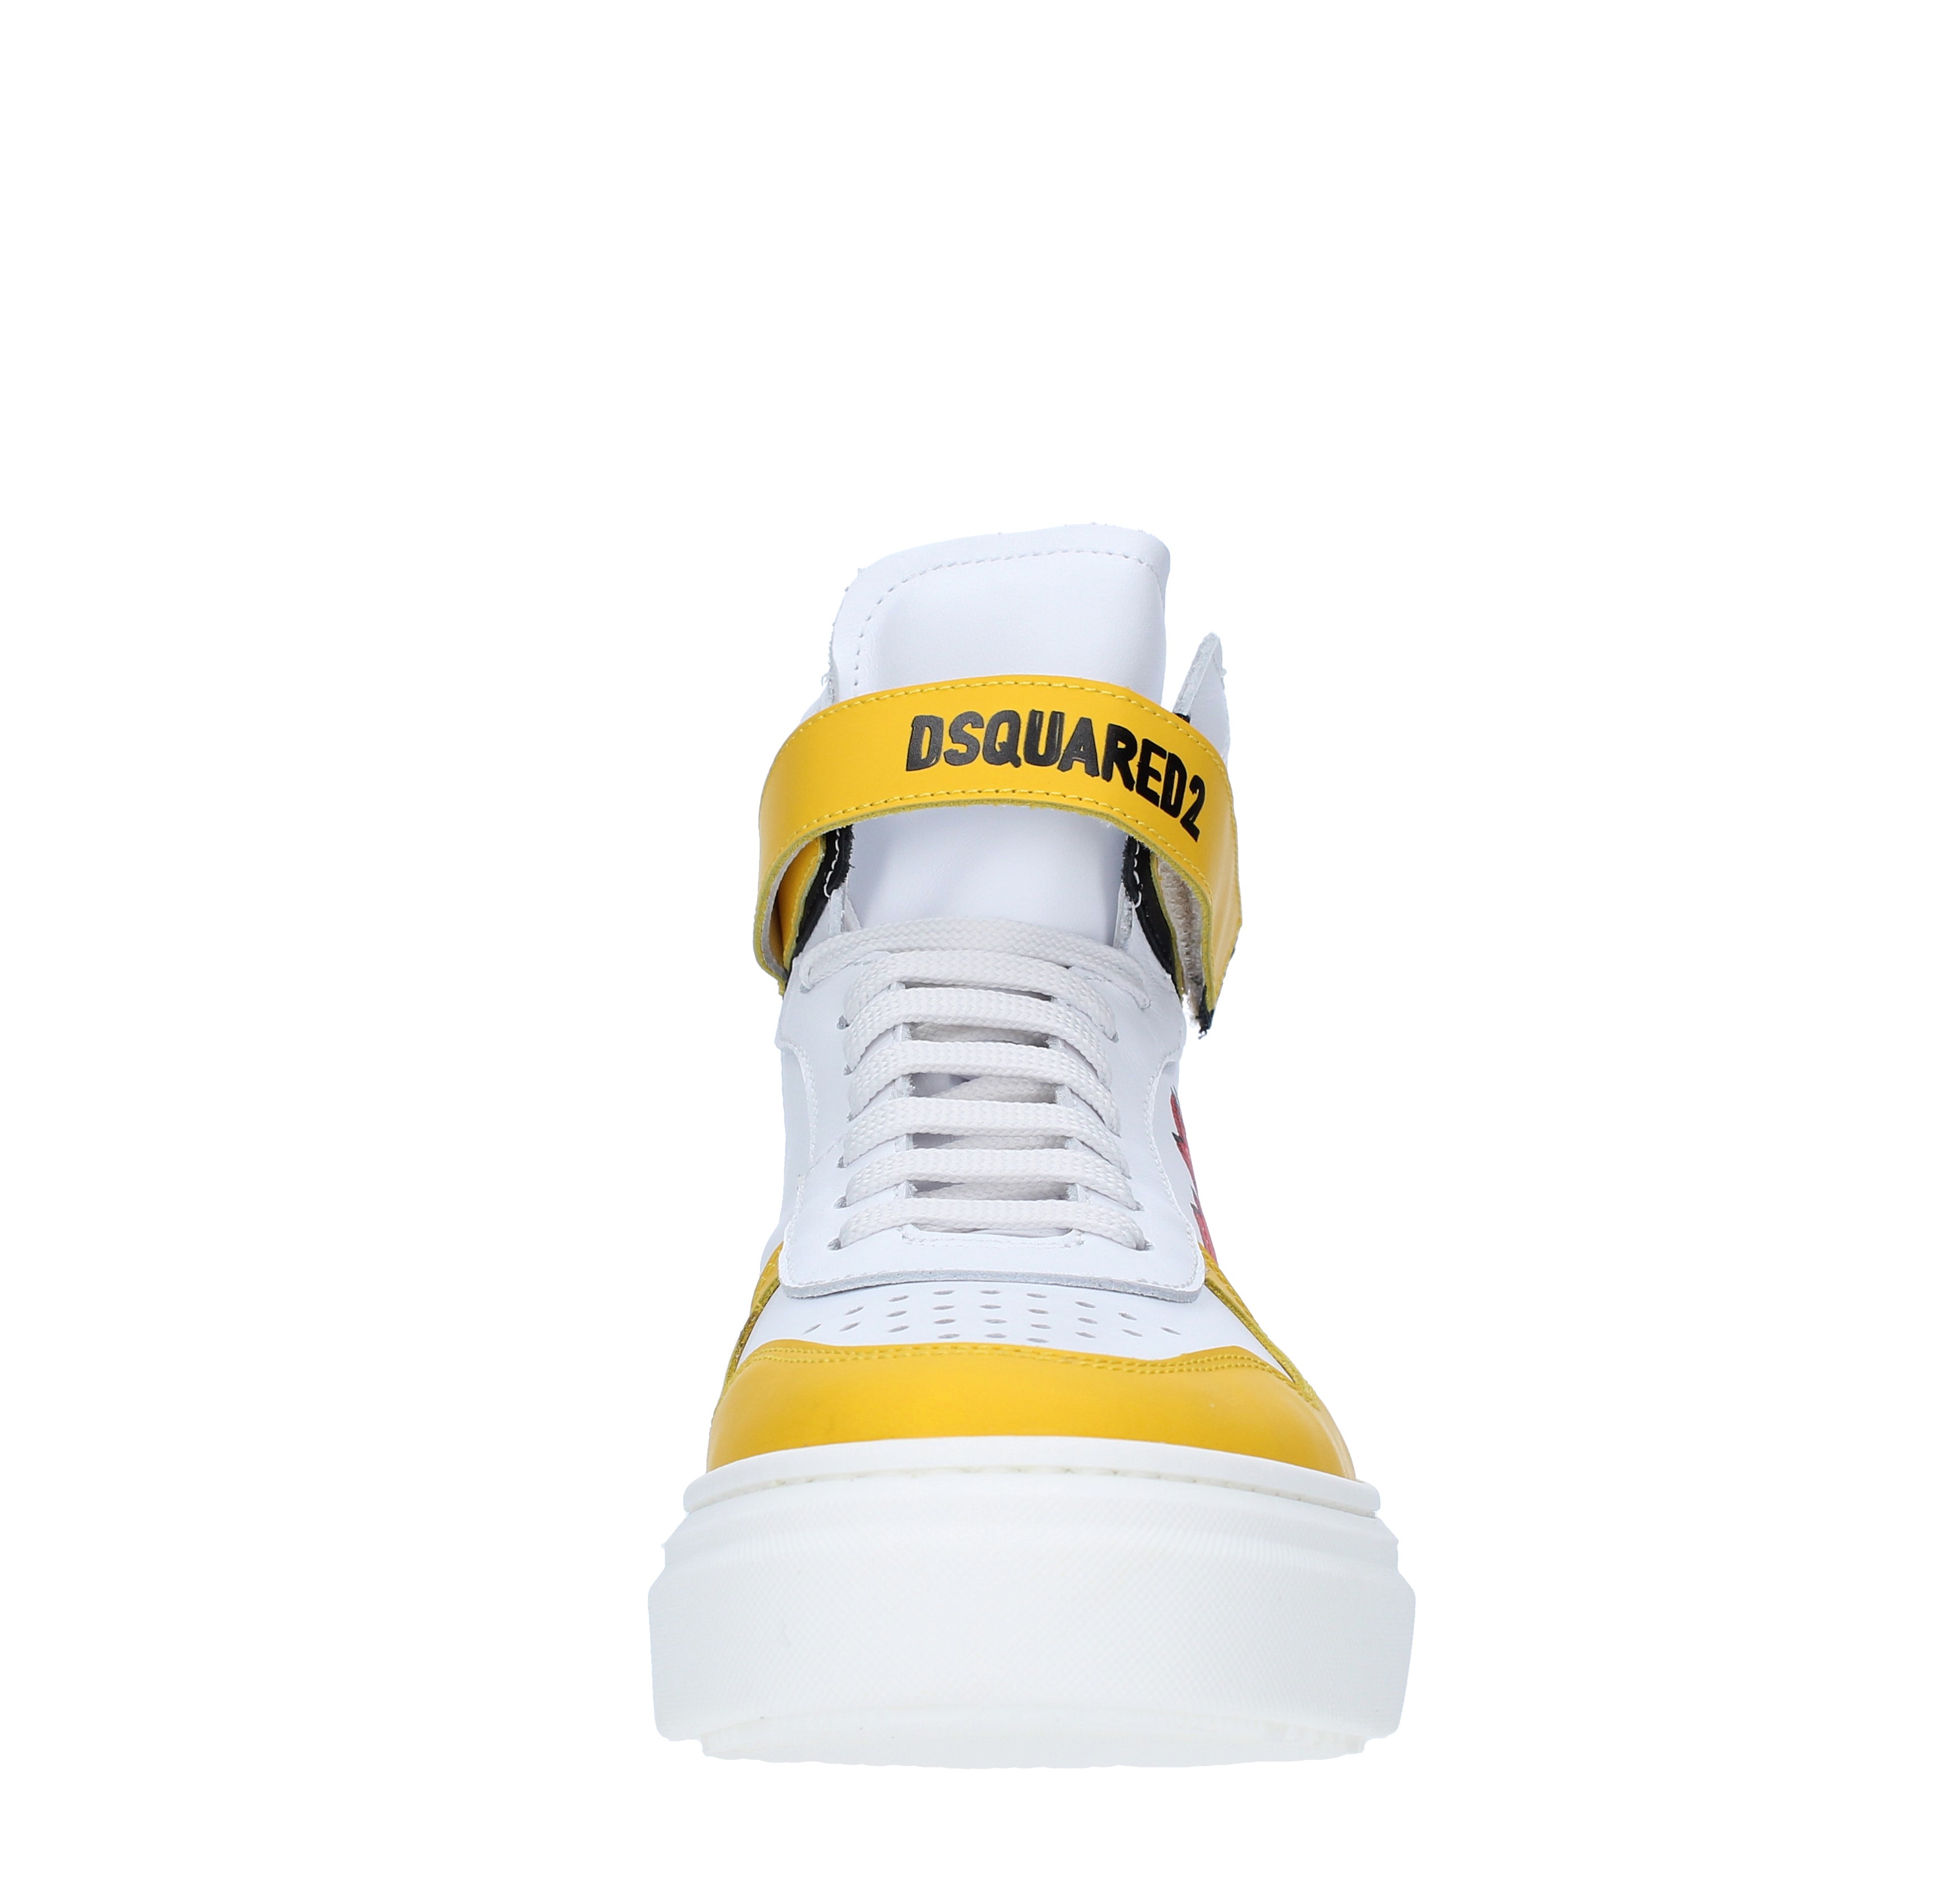 Sneakers alte in pelle - DSQUARED2 - Ginevra calzature